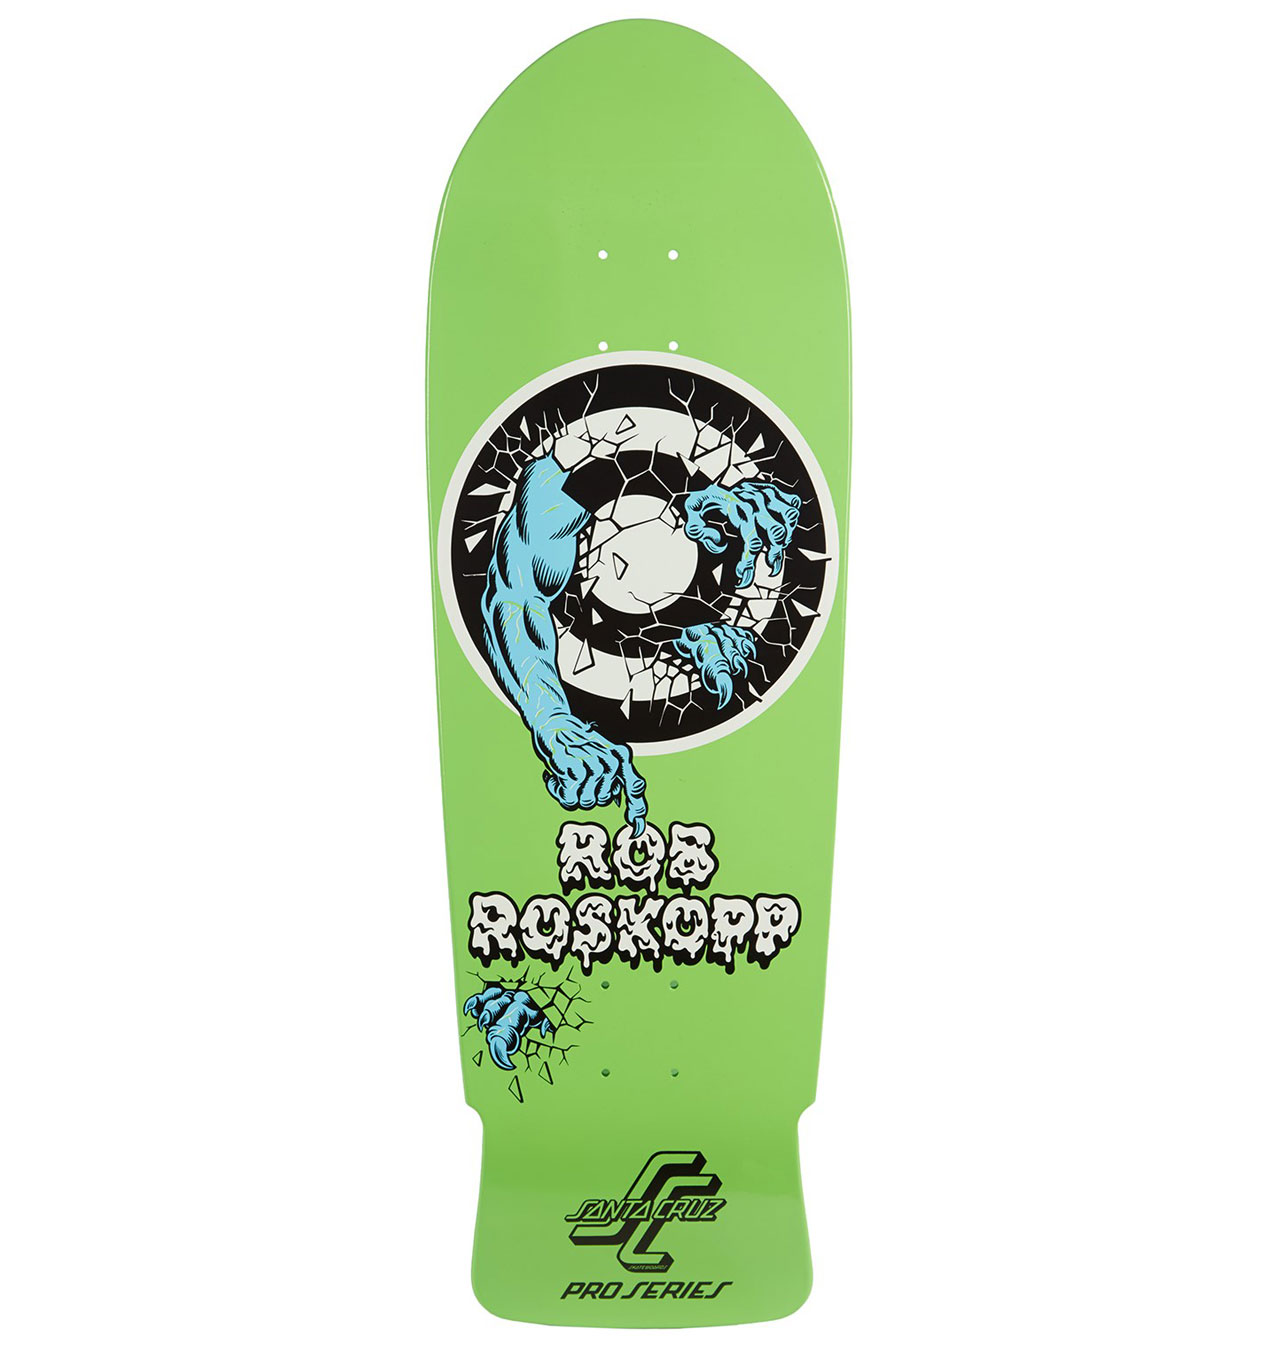 Santa Cruz - Rob Target 2 Green Fluorescent Reissue Skateboard Deck 10.0